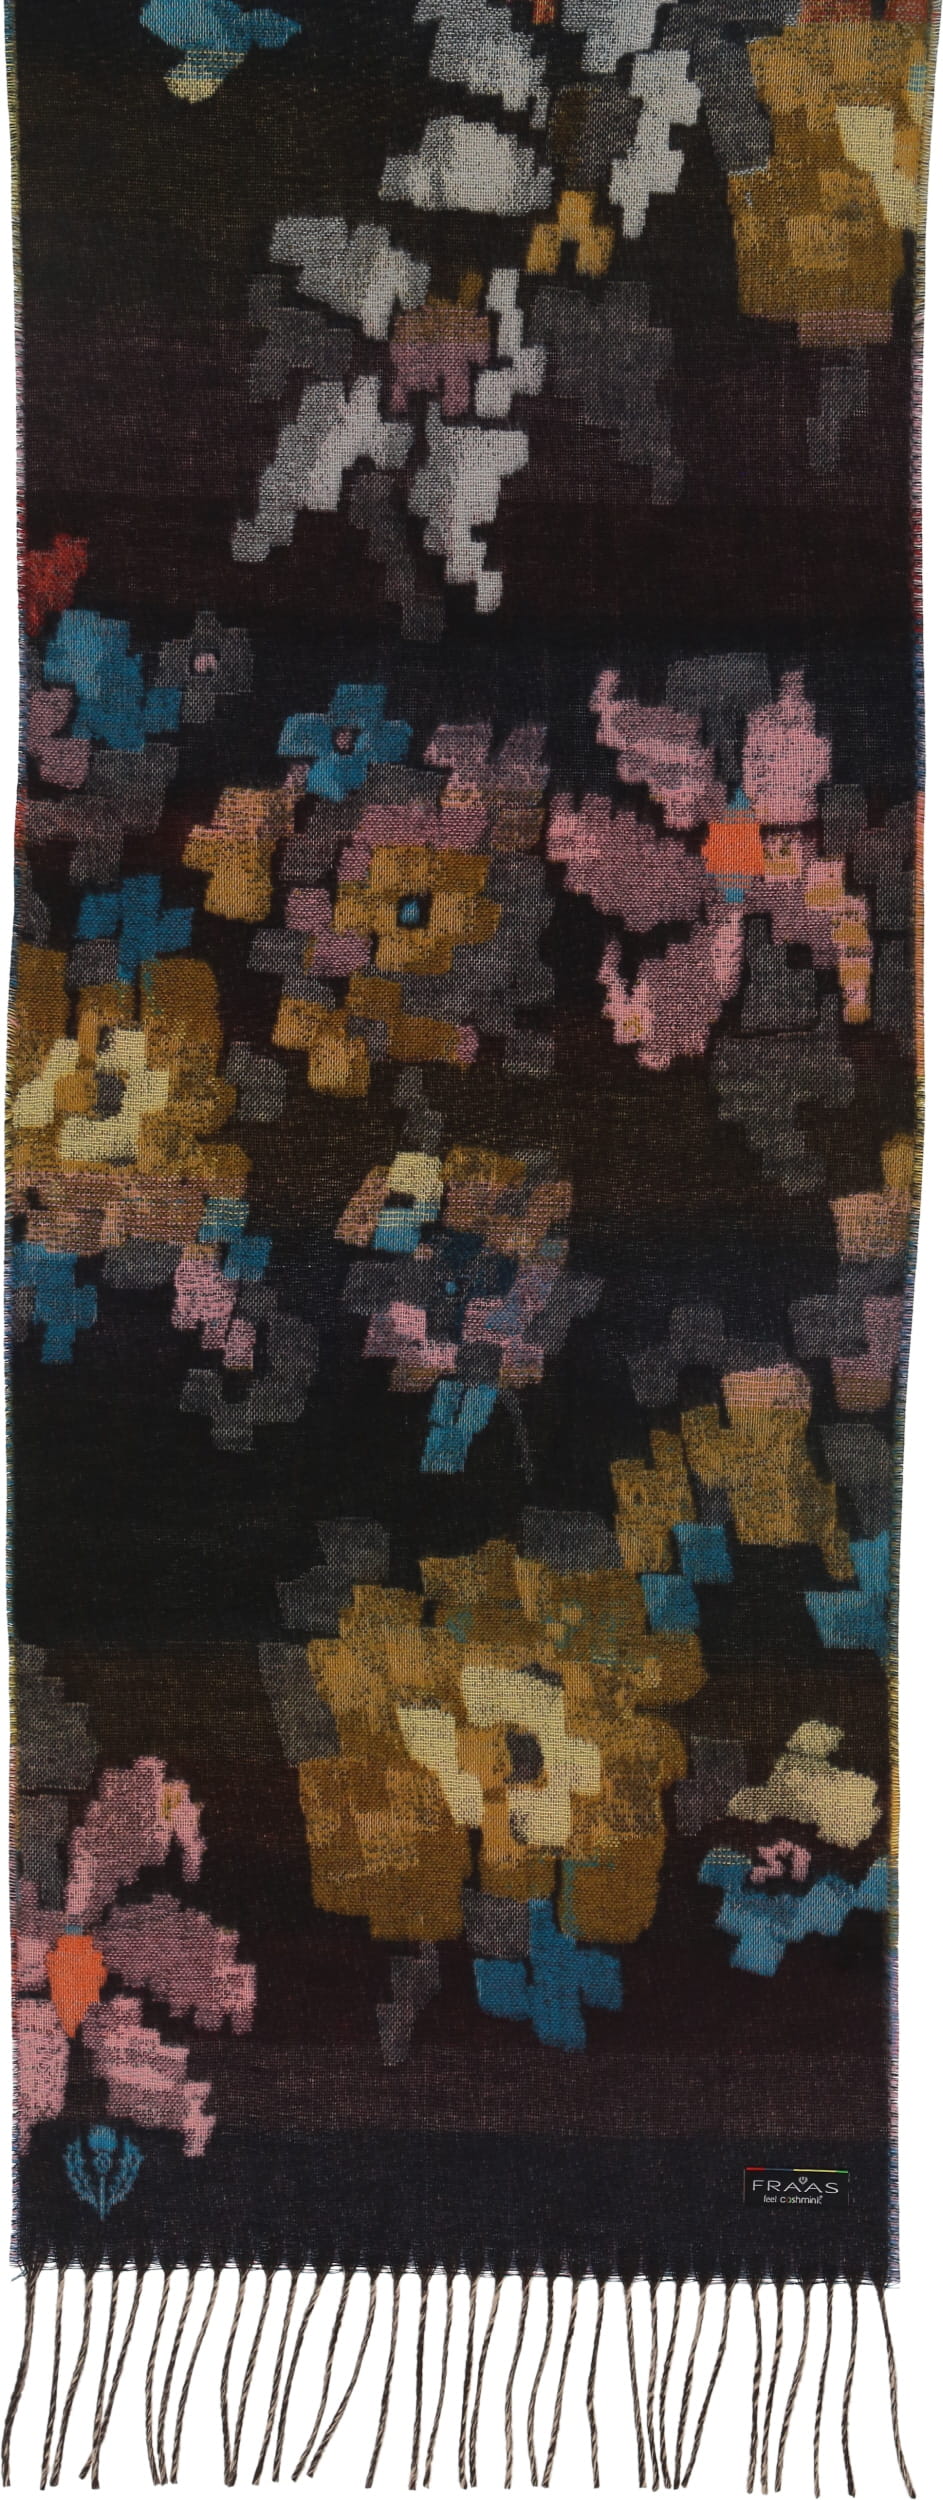 Pixel fringed scarf